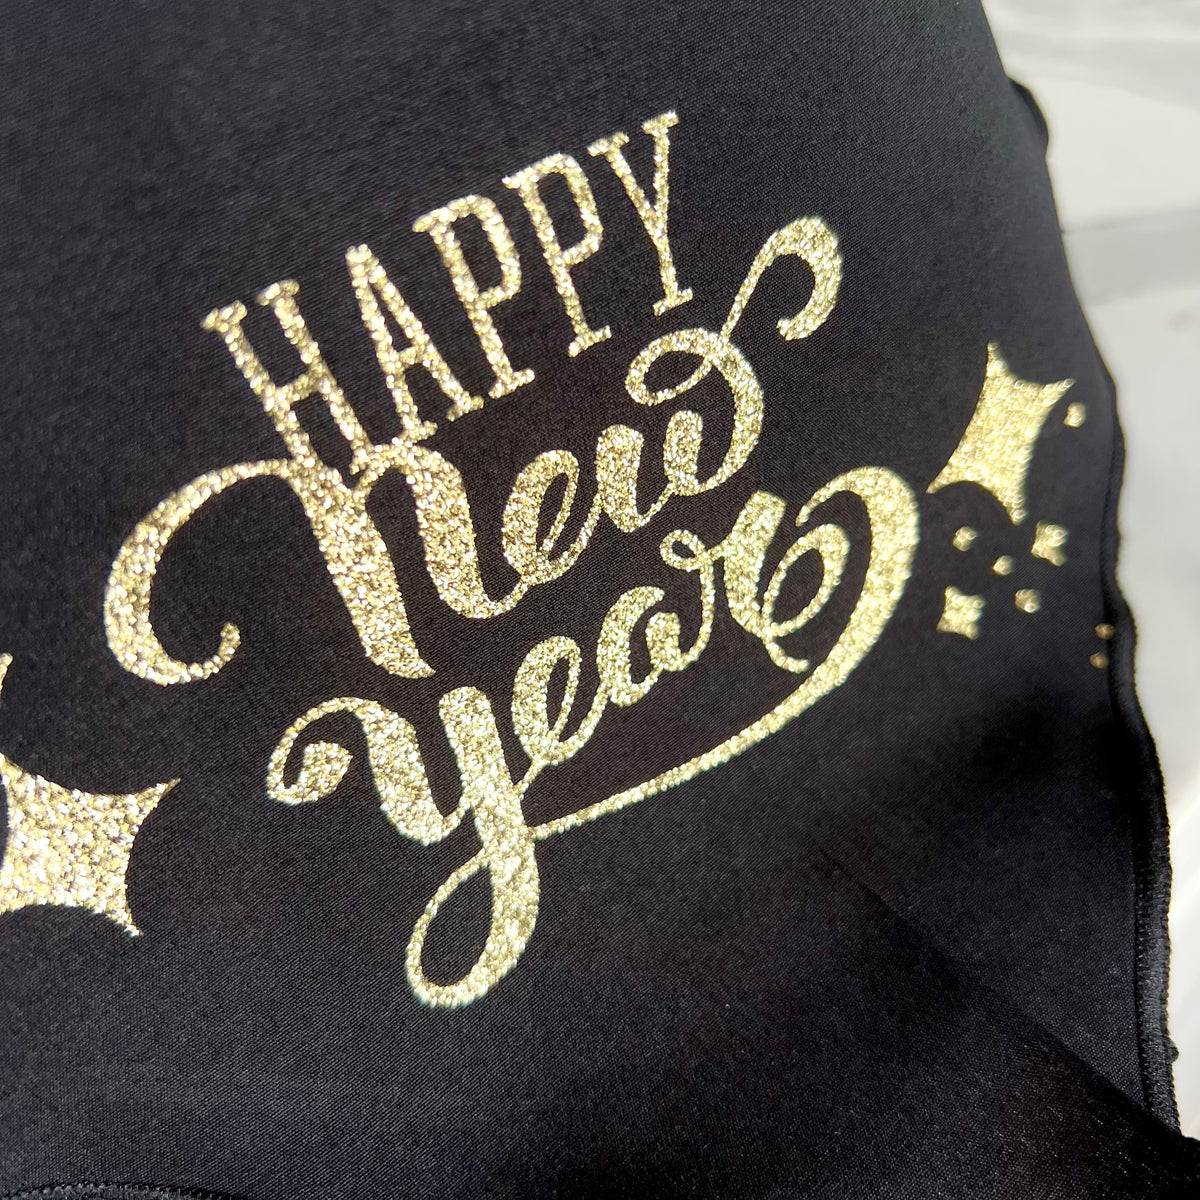 New Year Dog Bandana - Happy New Year - Black & Gold Glitter Bandana - All Sizes